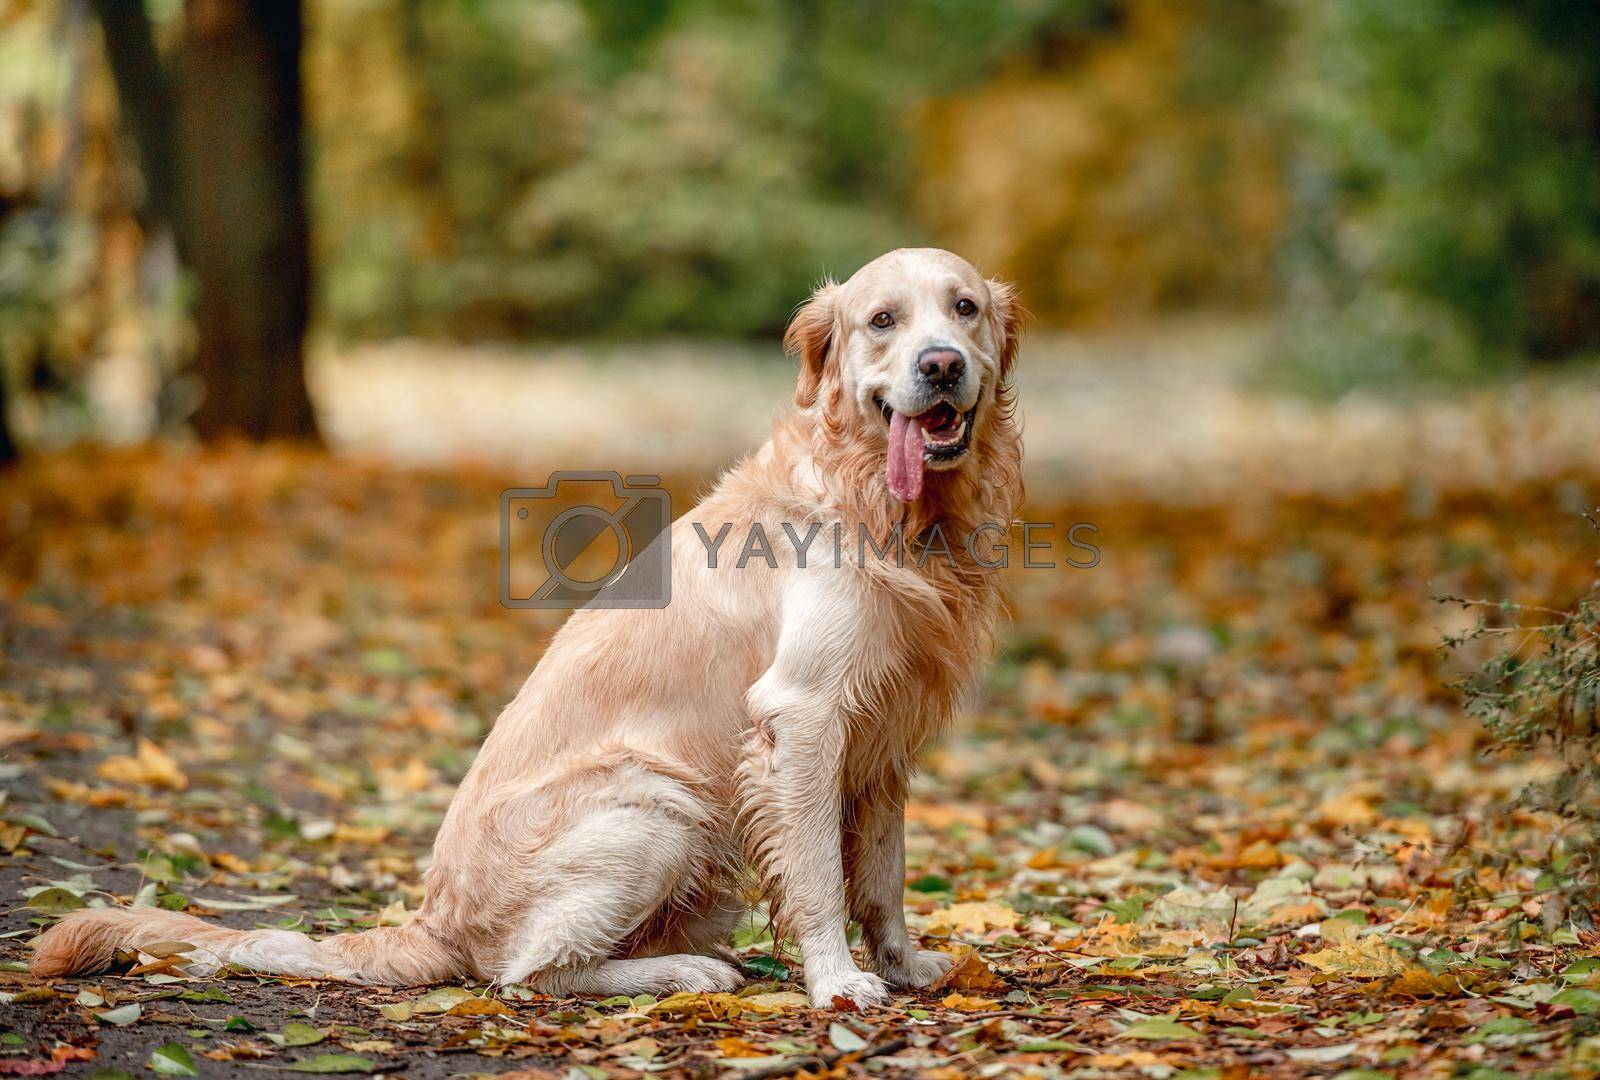 Royalty free image of Golden retriever dog in park by tan4ikk1